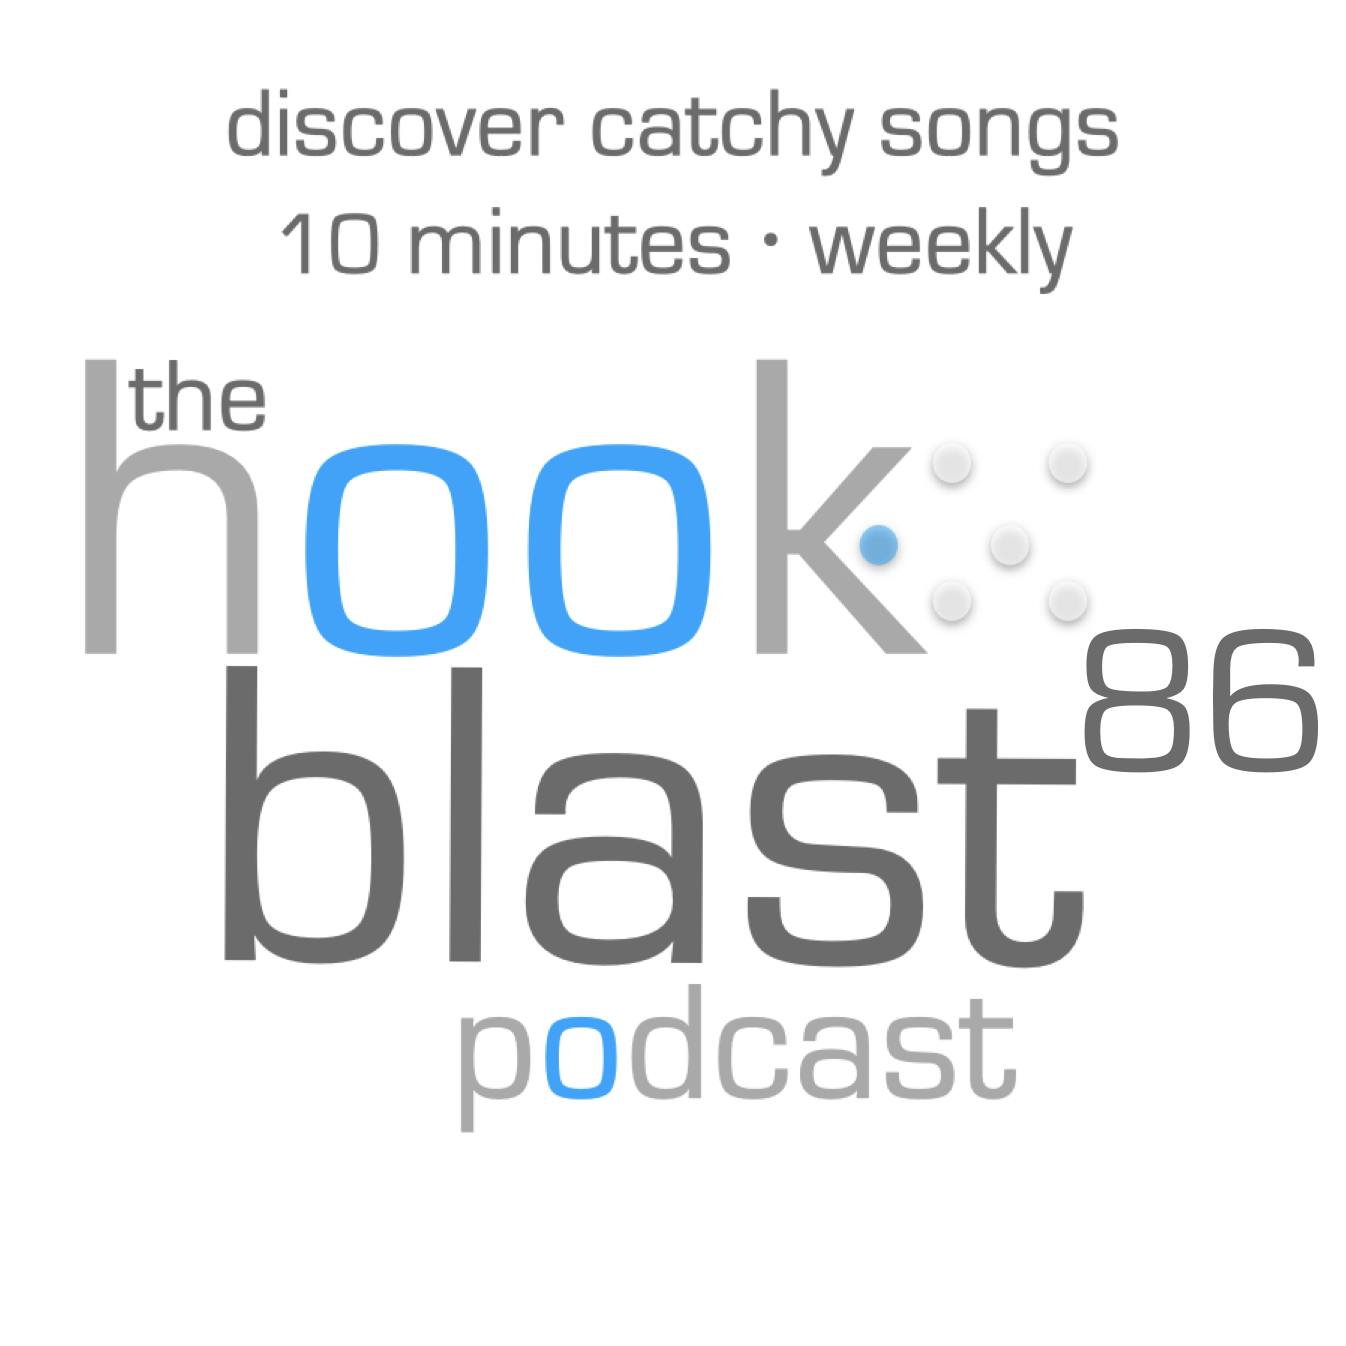 The Hookblast Podcast - Episode 86